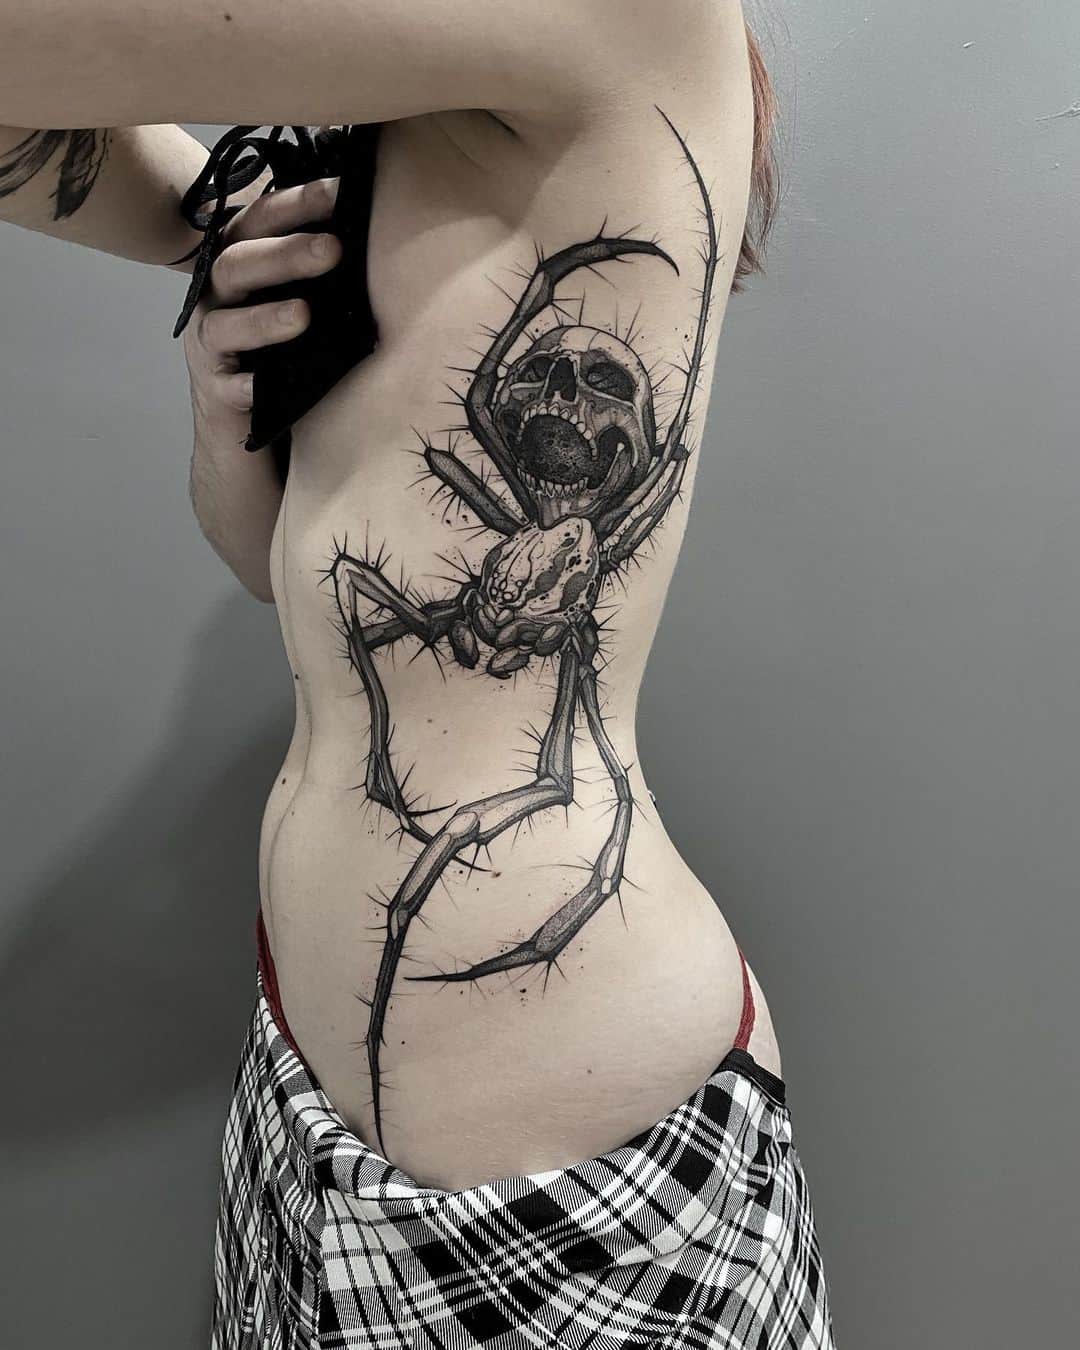 Rib/Side tattoo by Carlos from Body Language Tattoo in NYC : r/tattoos